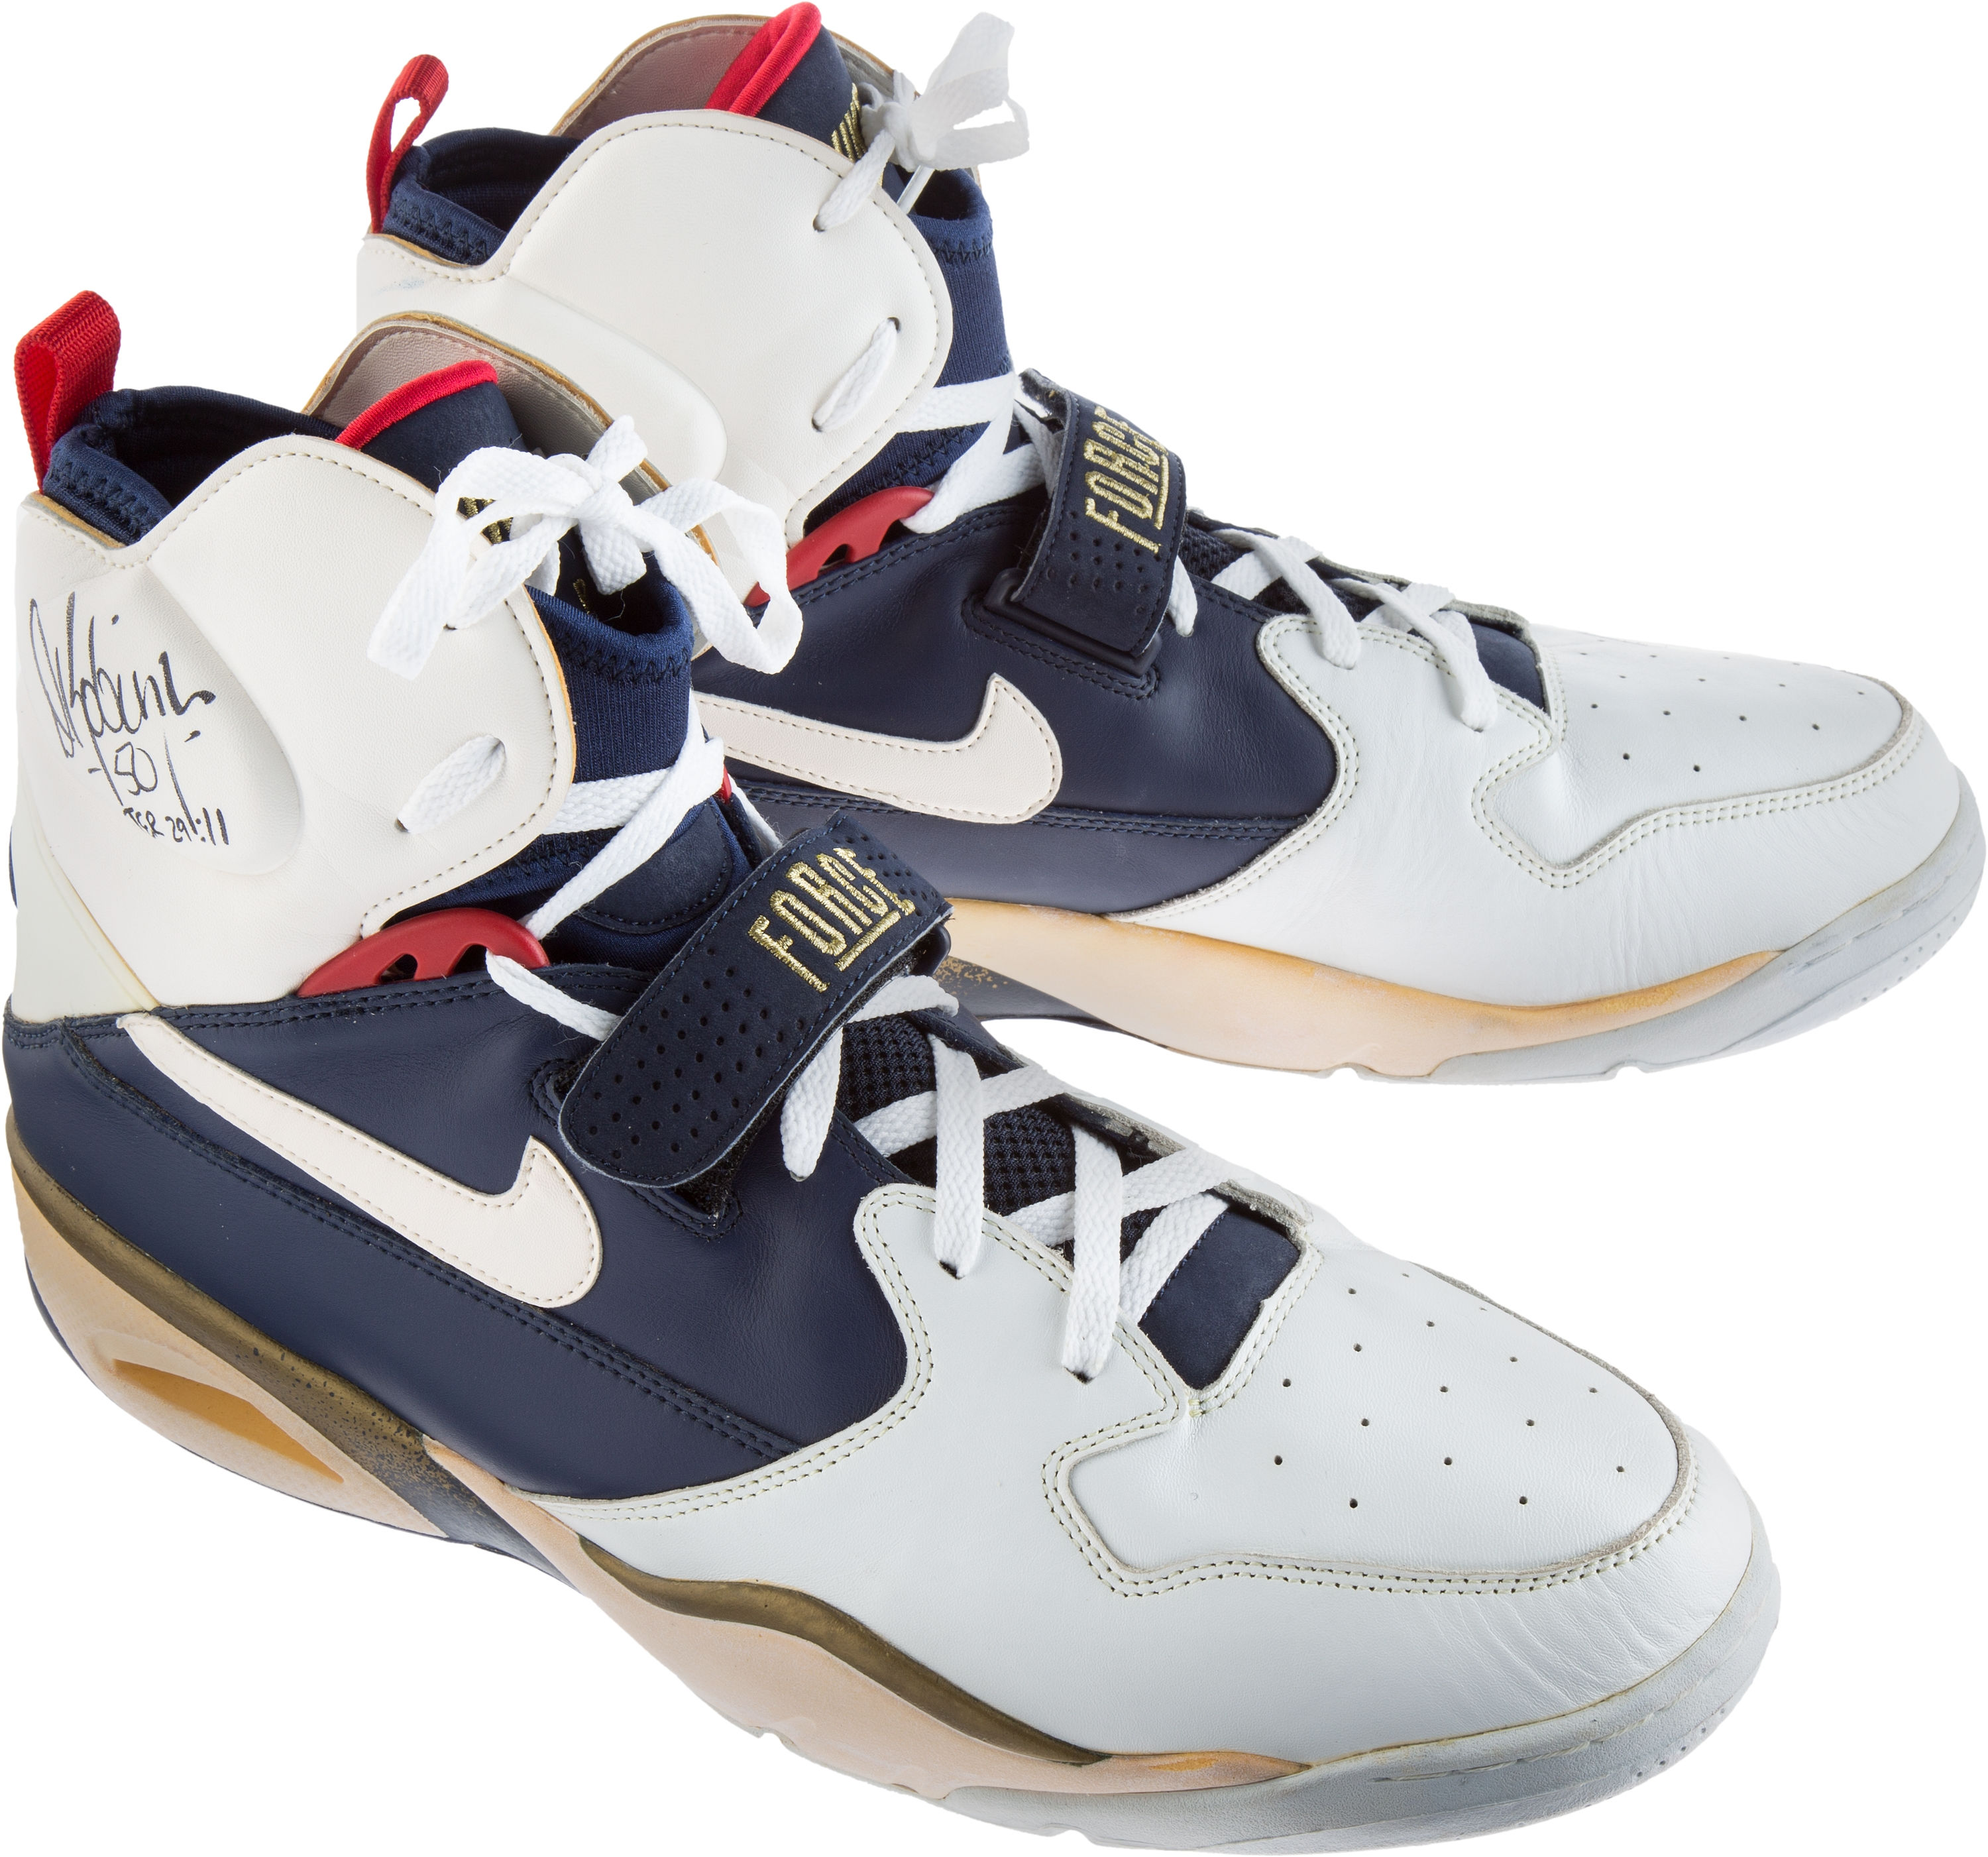 Doctor auctions Michael Jordan's 1992 Olympic shoes, U.S. Dream